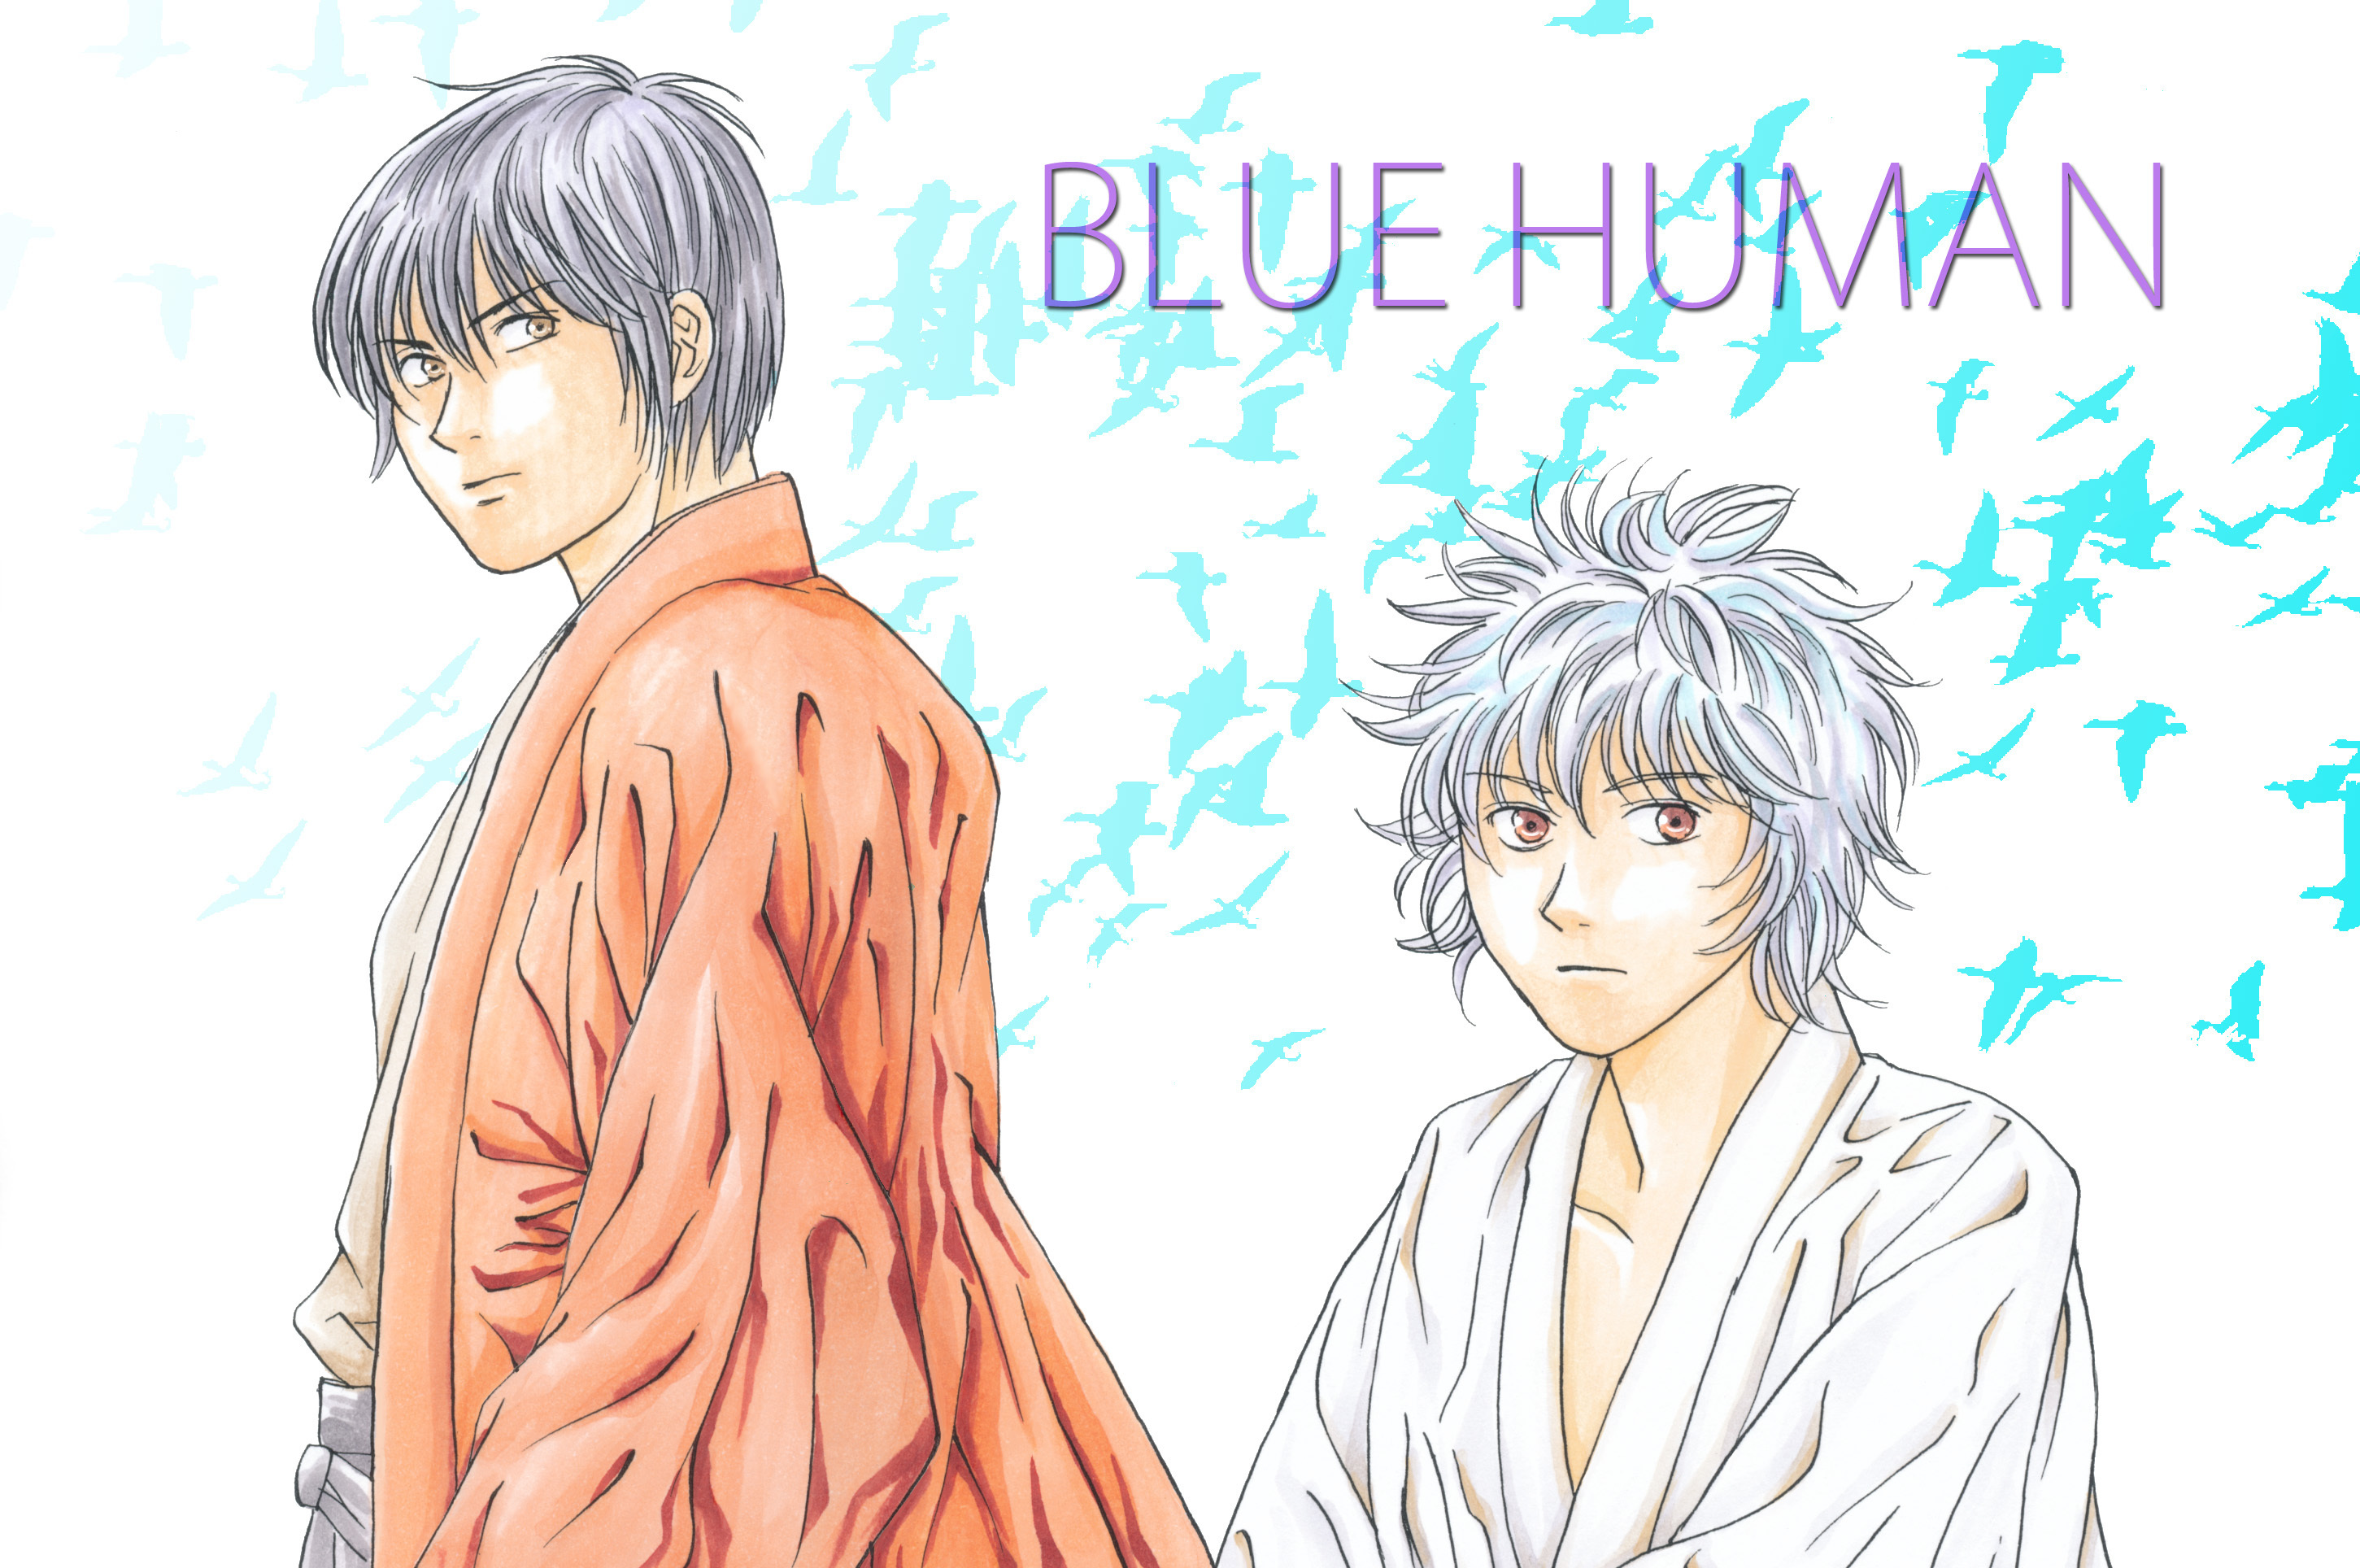 BLUE HUMAN